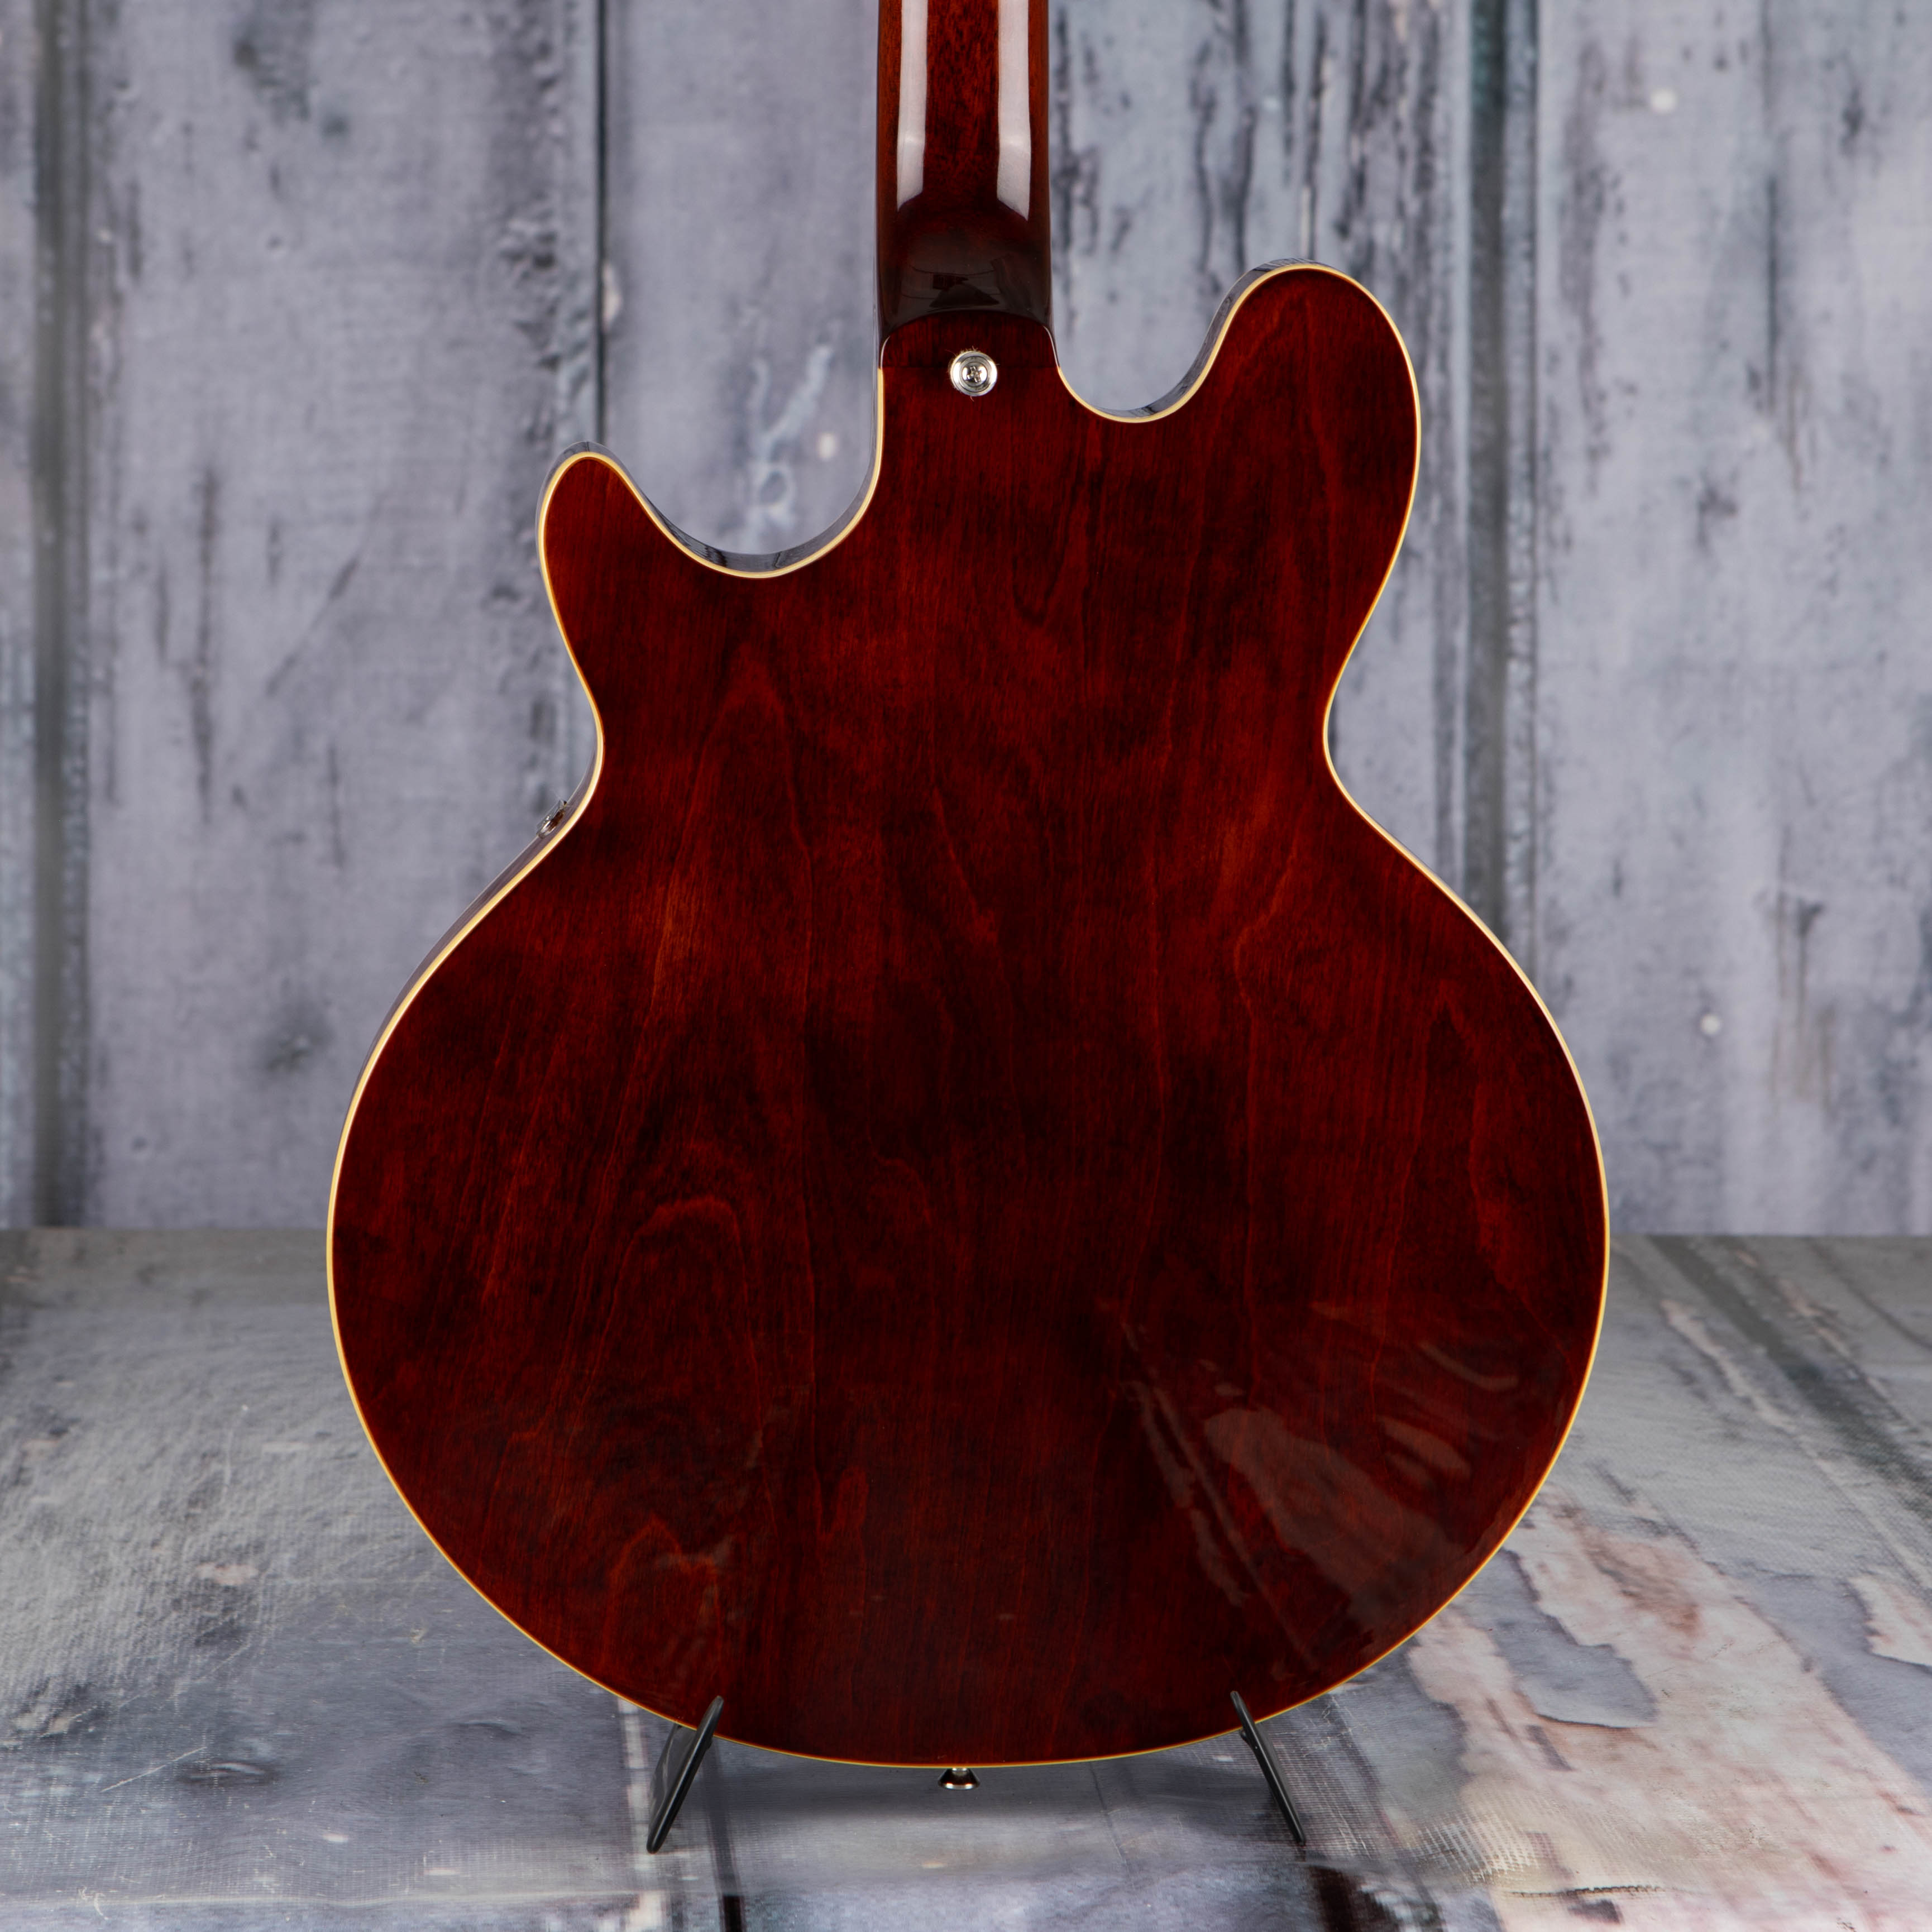 Epiphone Jack Casady Semi-Hollowbody Bass Guitar, Sparkling Burgundy, back closeup